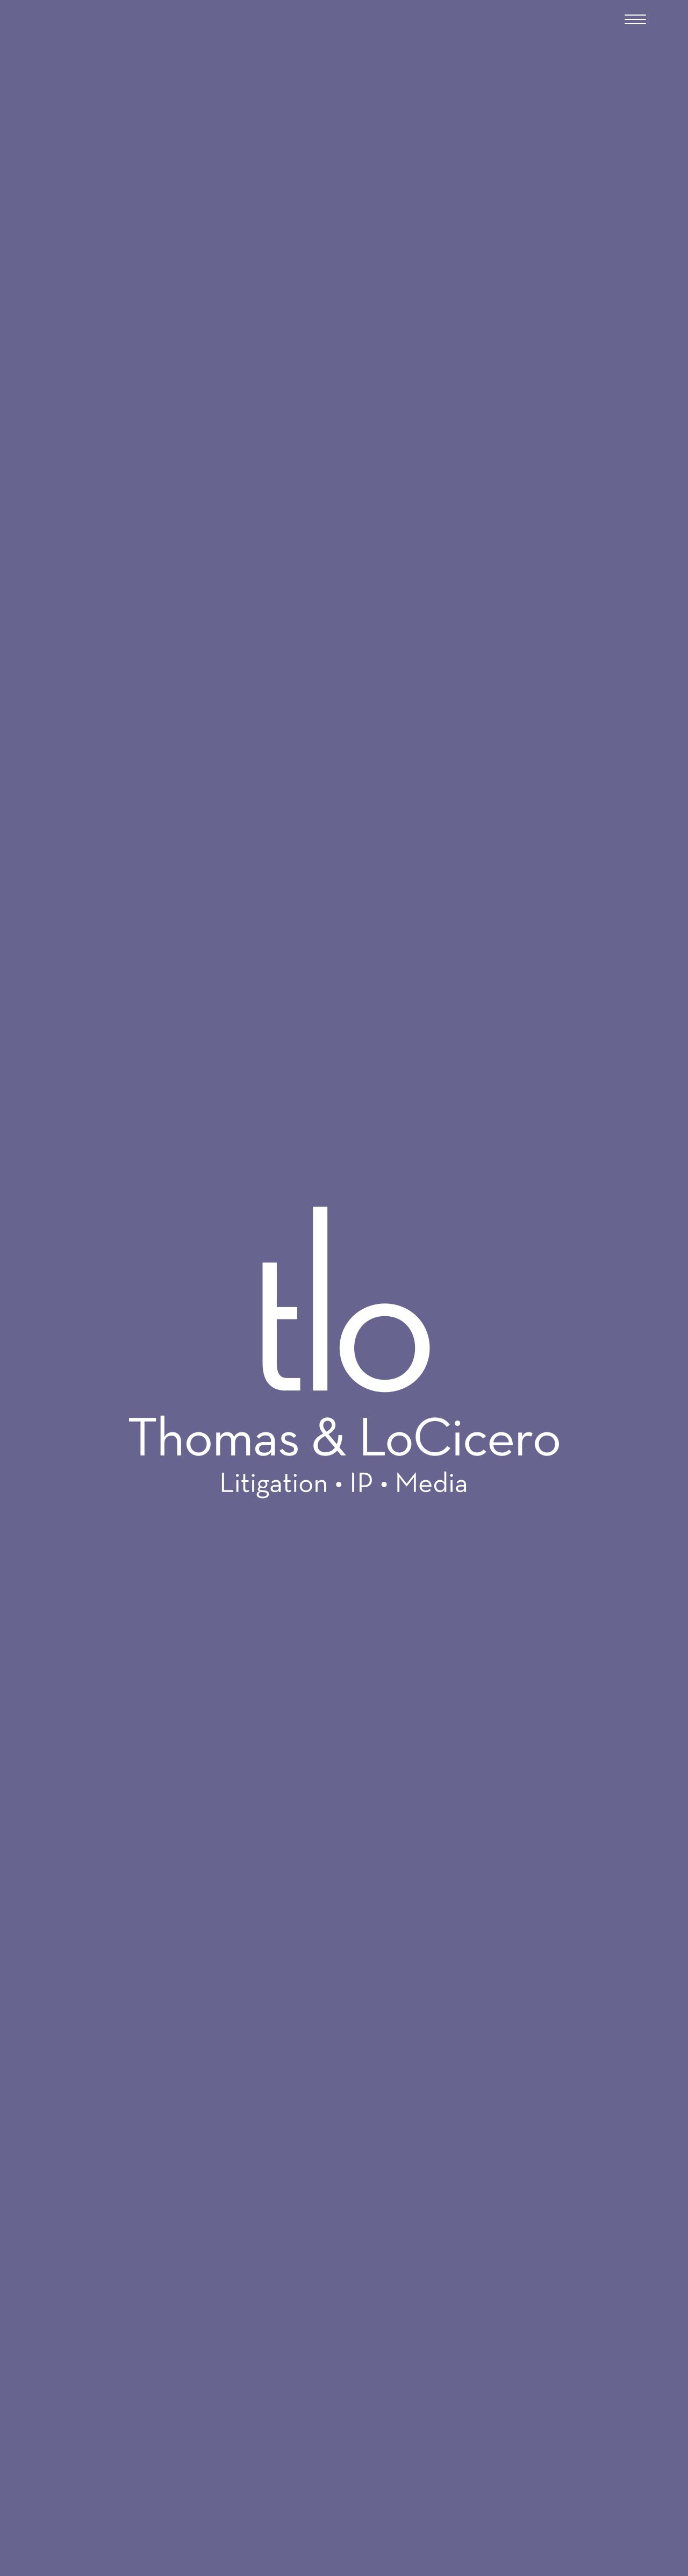 Thomas & LoCicero PL - Tampa FL Lawyers